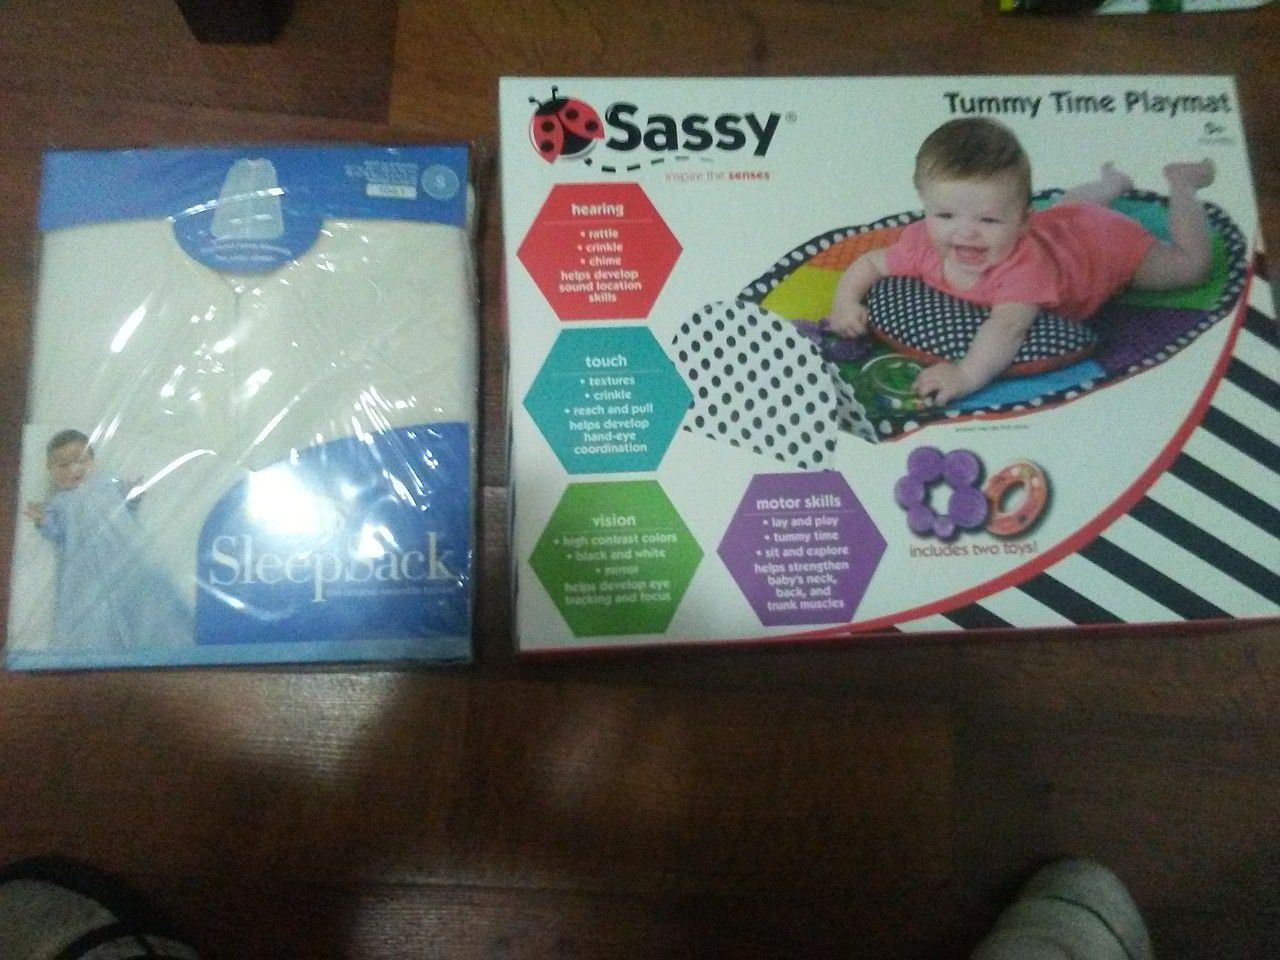 BRAND NEW Sassy tummy time playmat and halo sleep sack